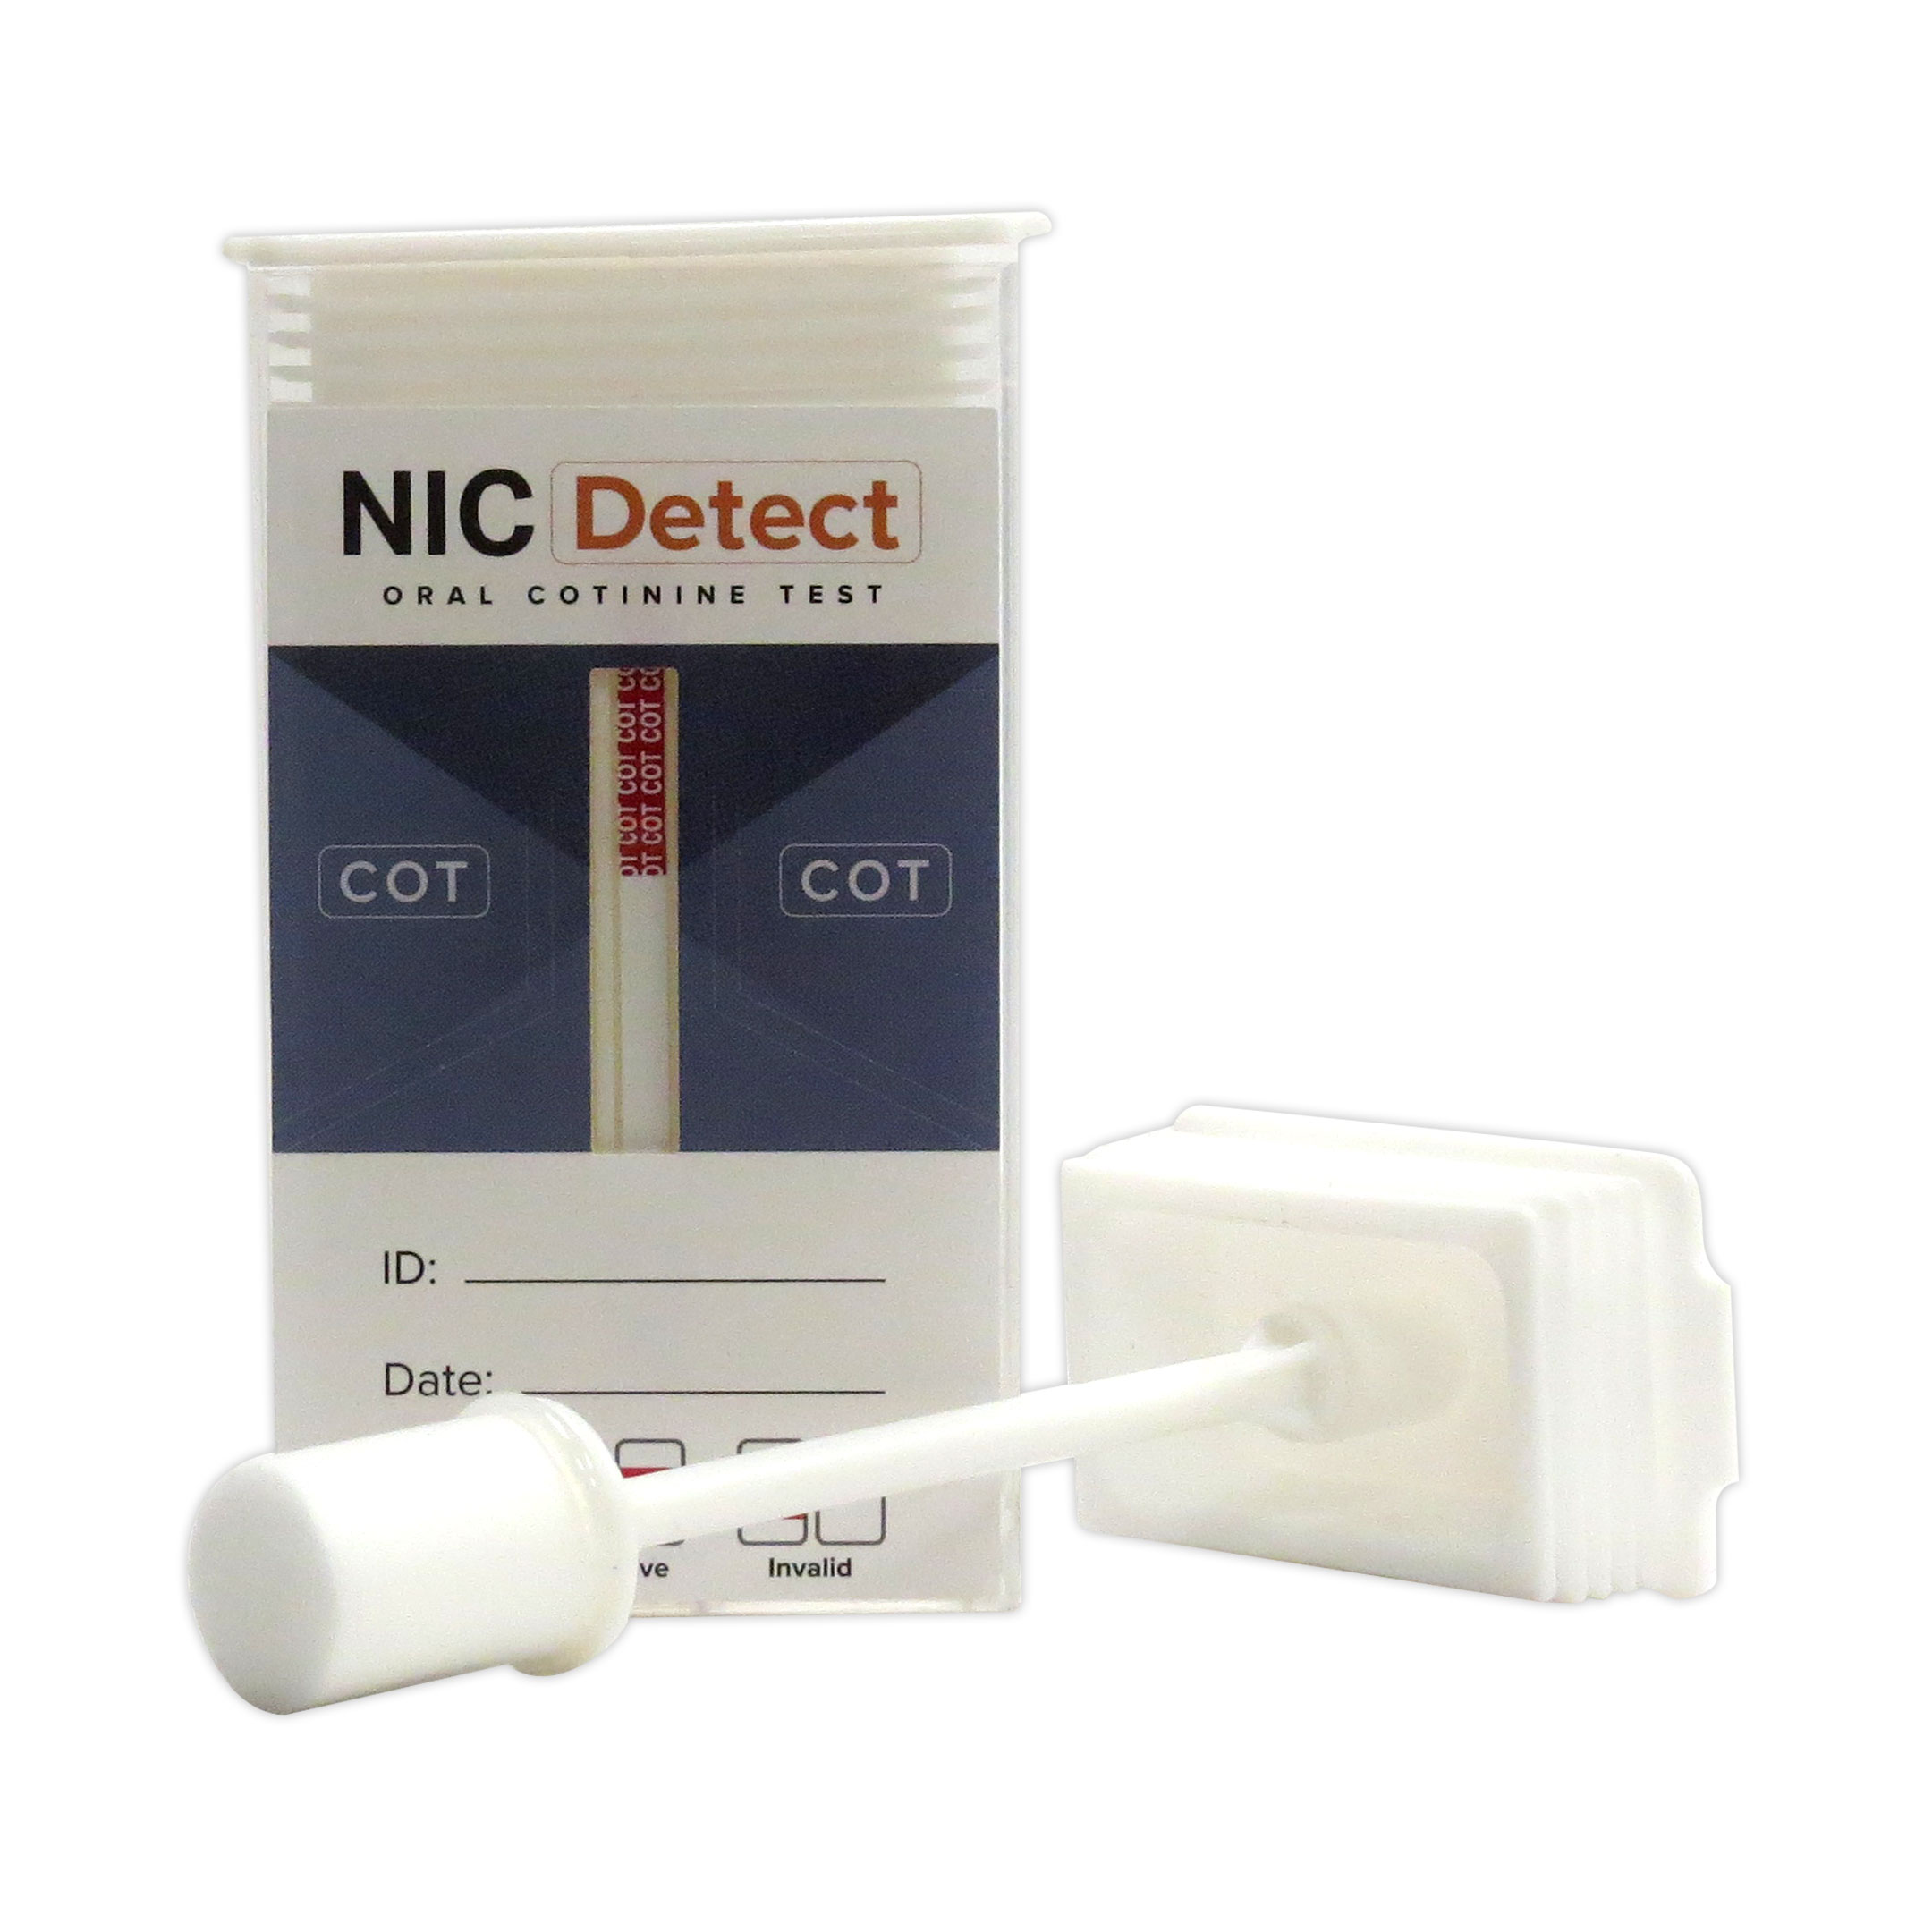 NIC Detect Oral Cotinine Test